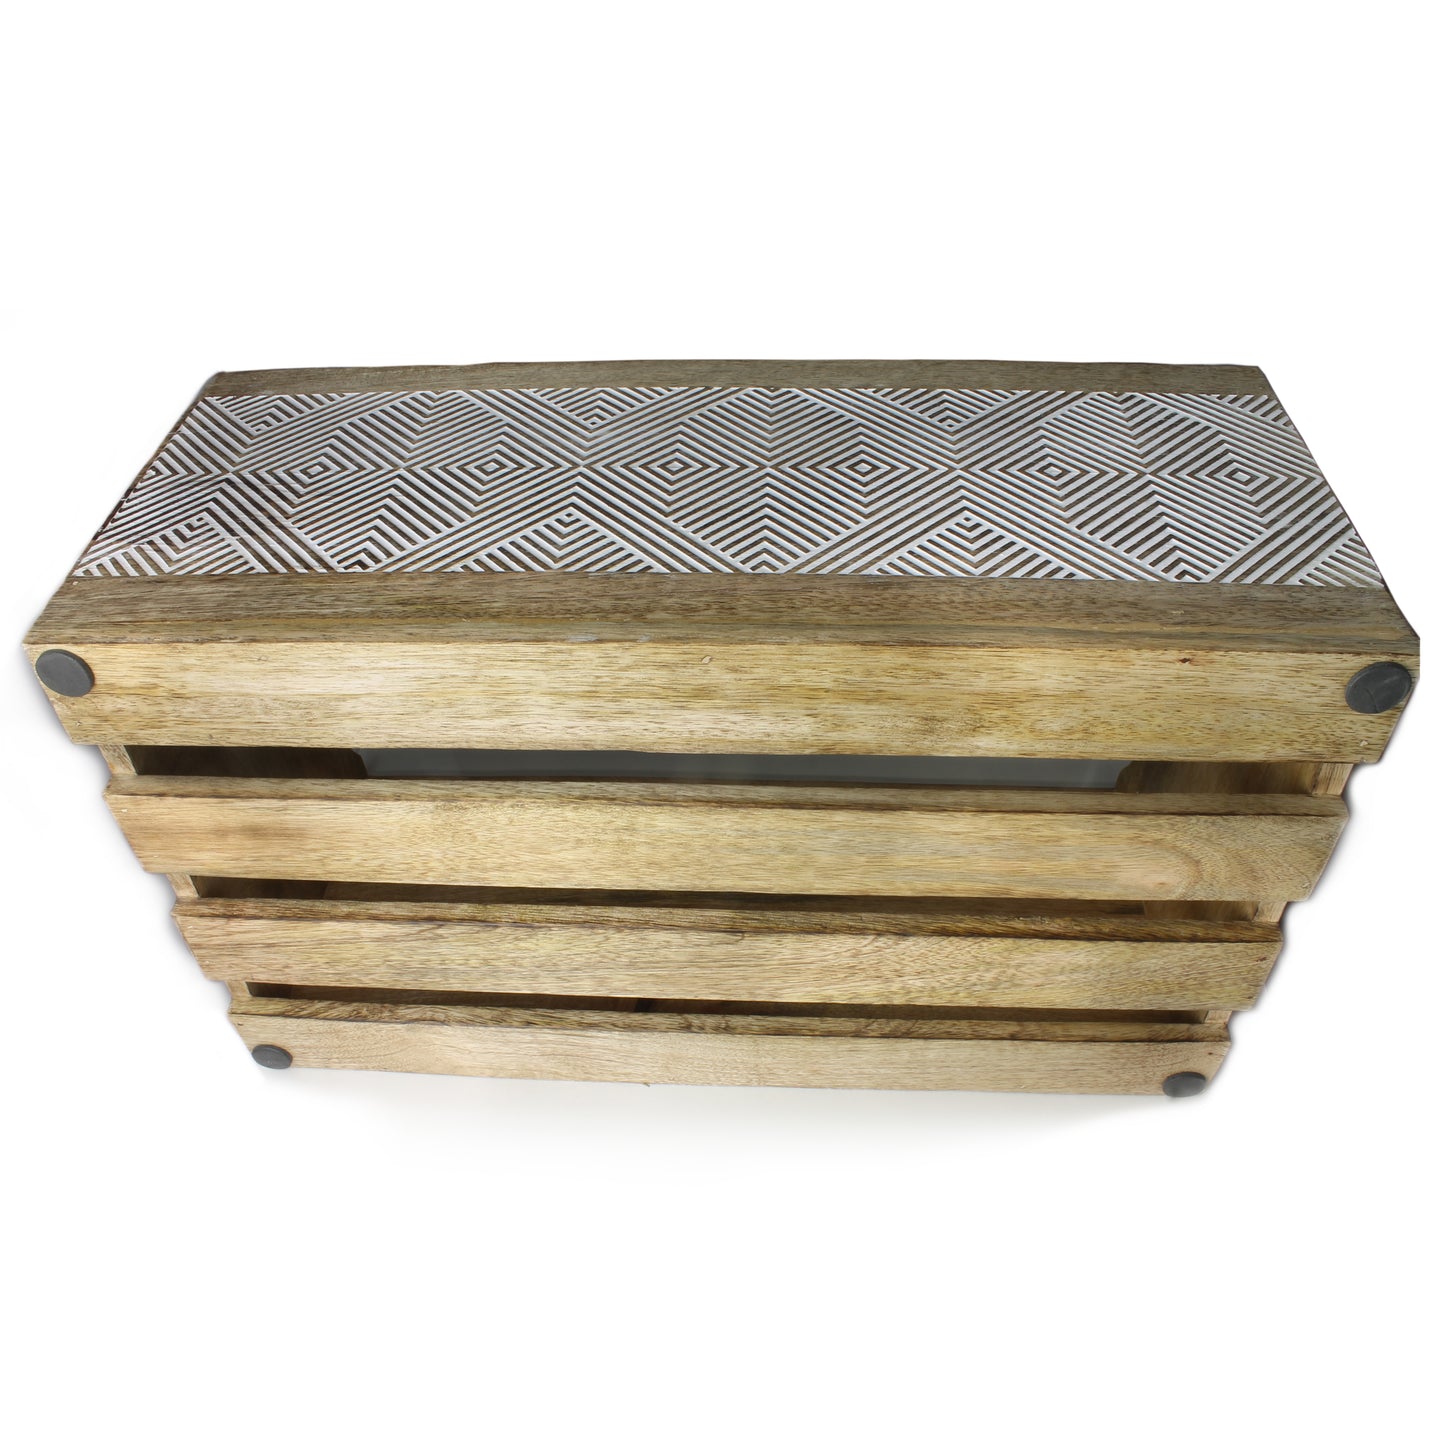 SAVON Rustic Wooden Storage Crate Organizer Large White